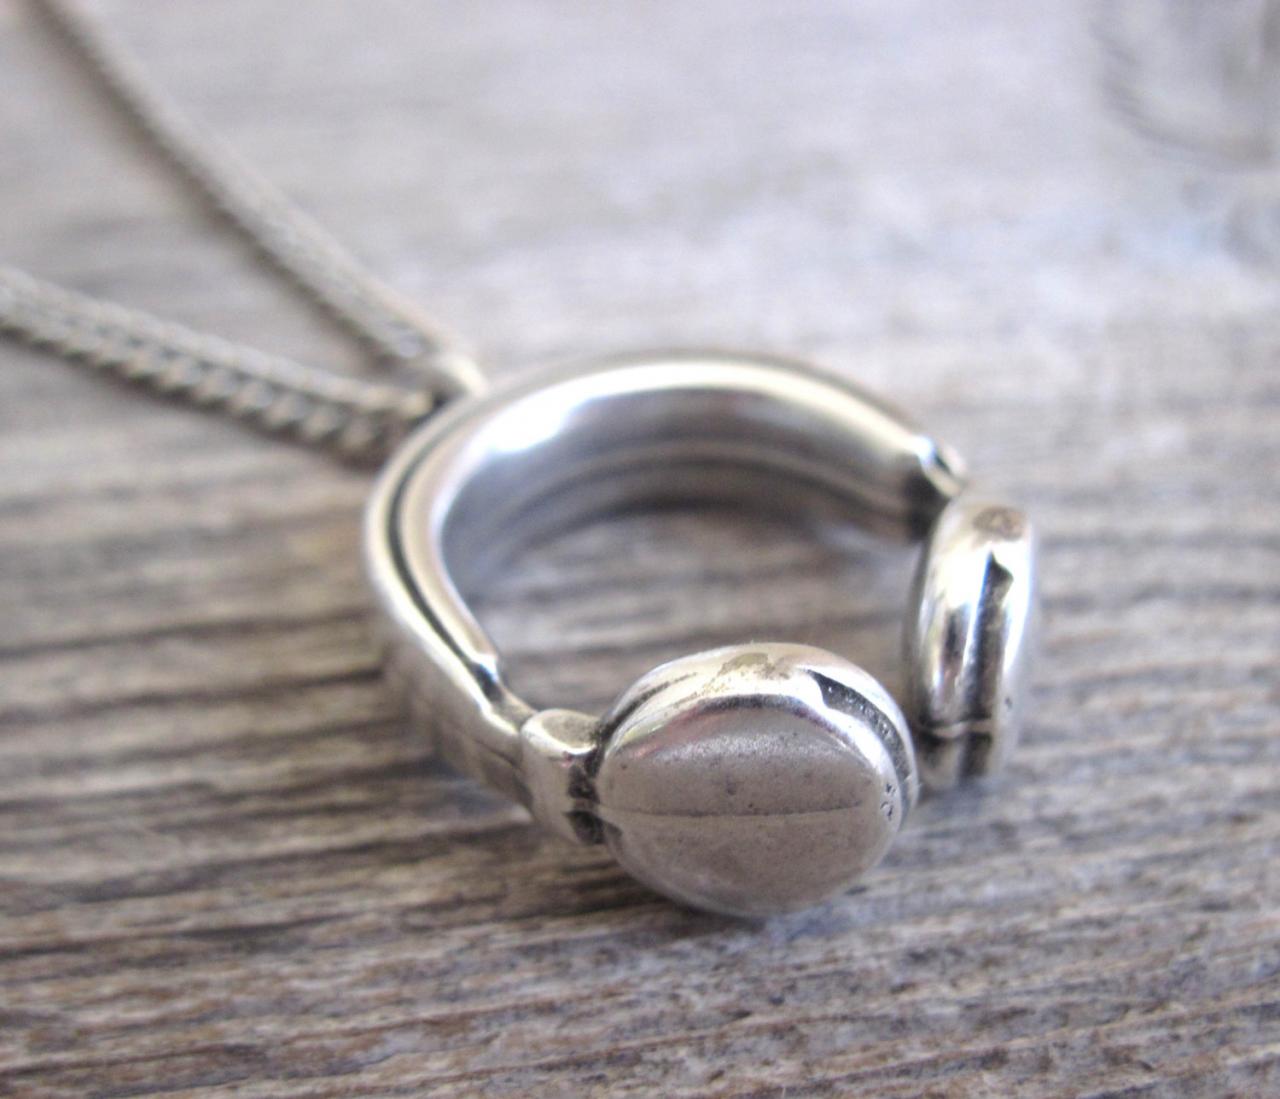 Men's Necklace - Men's Silver Necklace - Men's Jewelry - Men's Gift - Men's Pendant - Boyfriend Gift